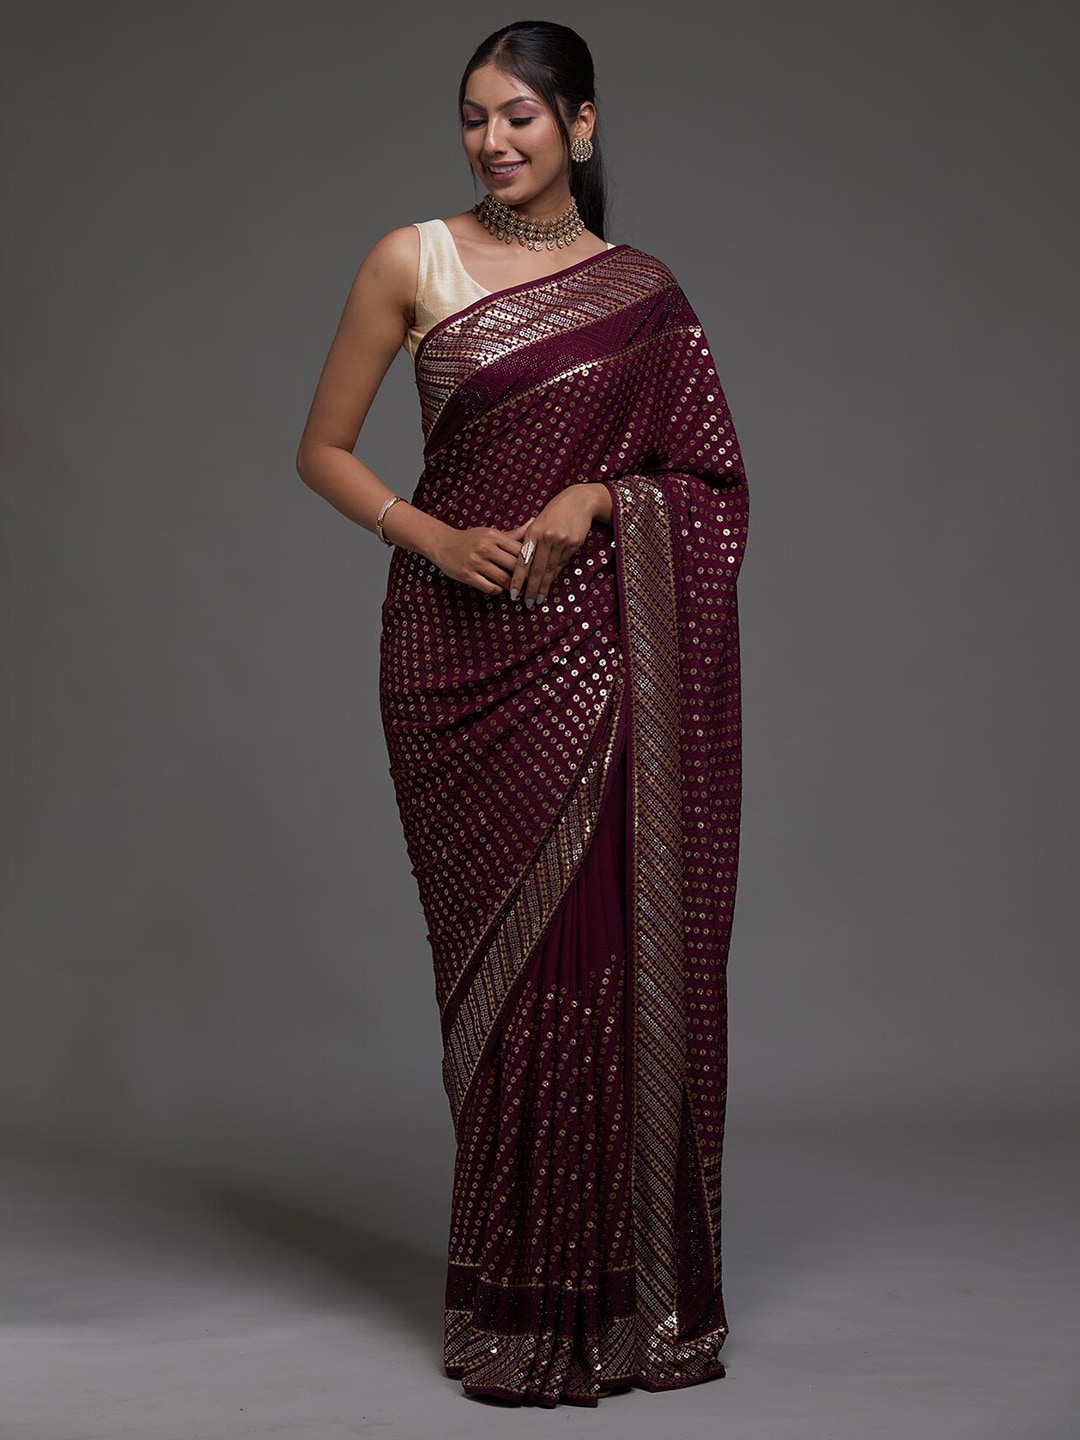 Koskii Maroon Embellished Sequinned Saree Price in India